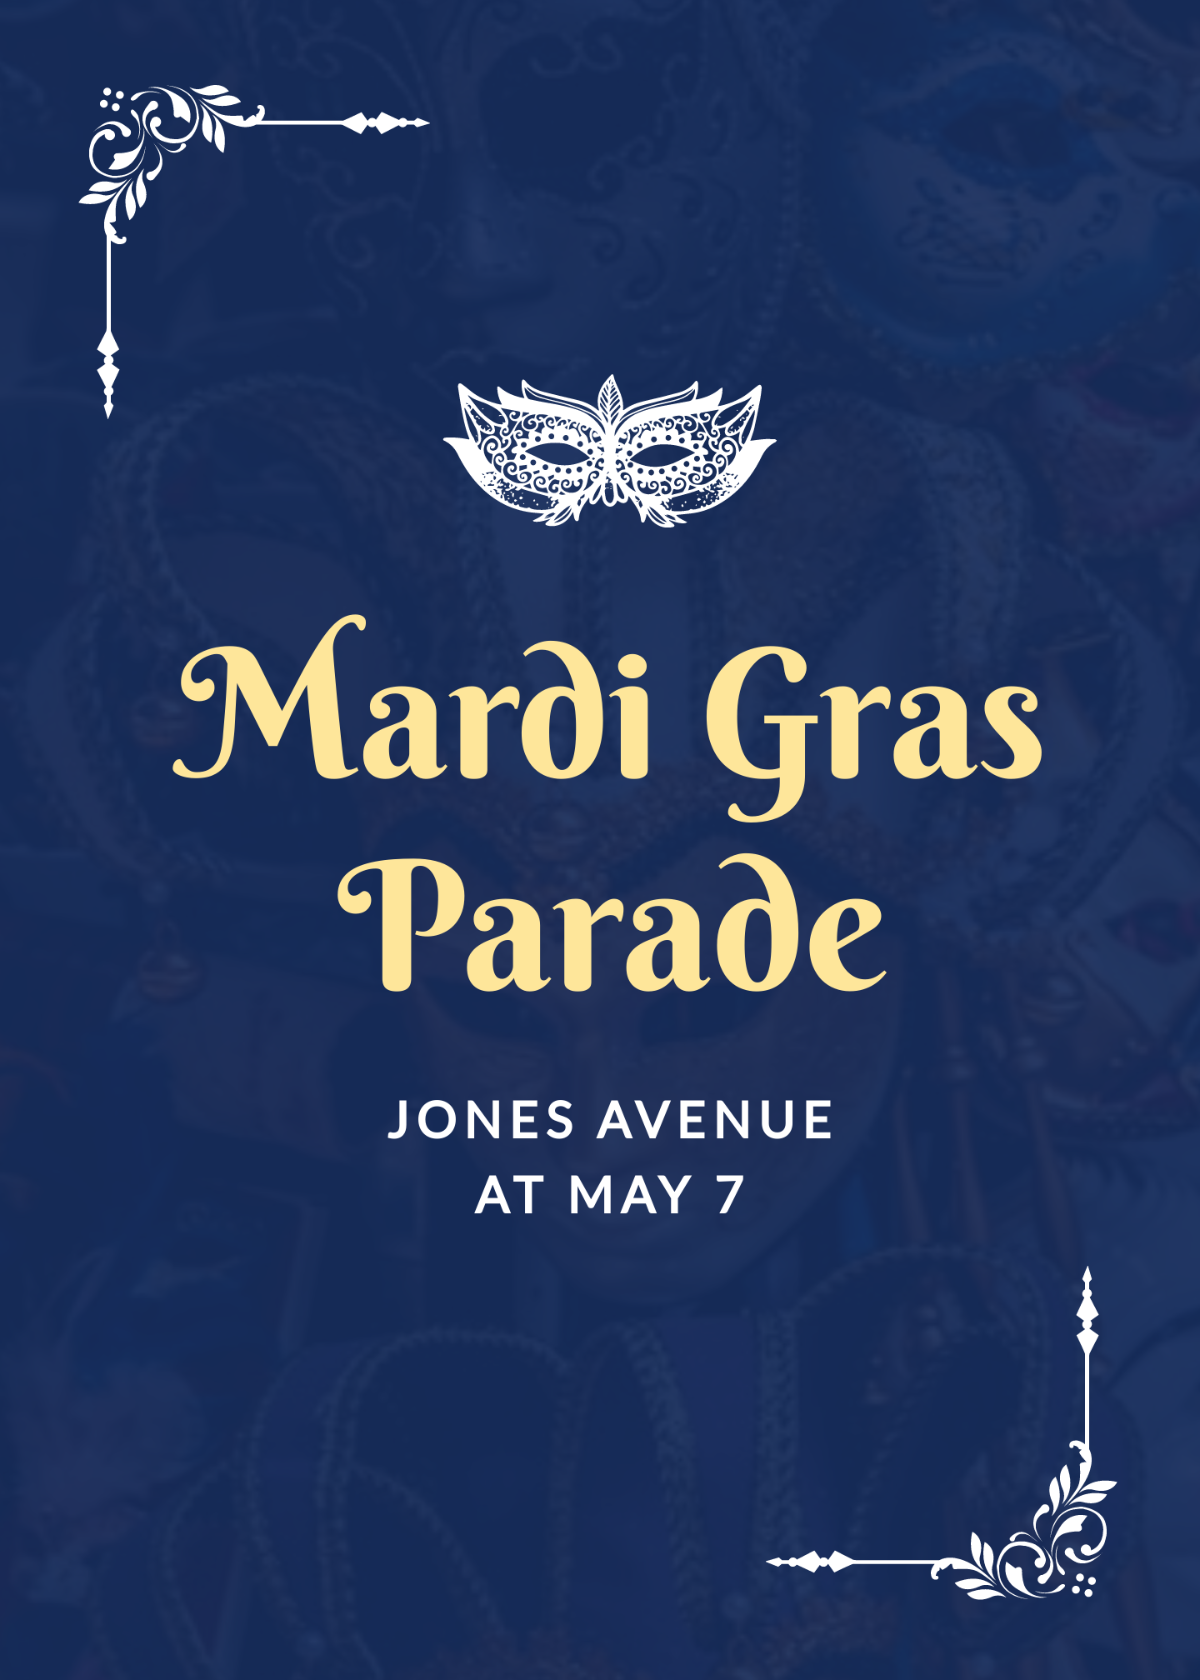 Mardi Gras Parade Invitation Template